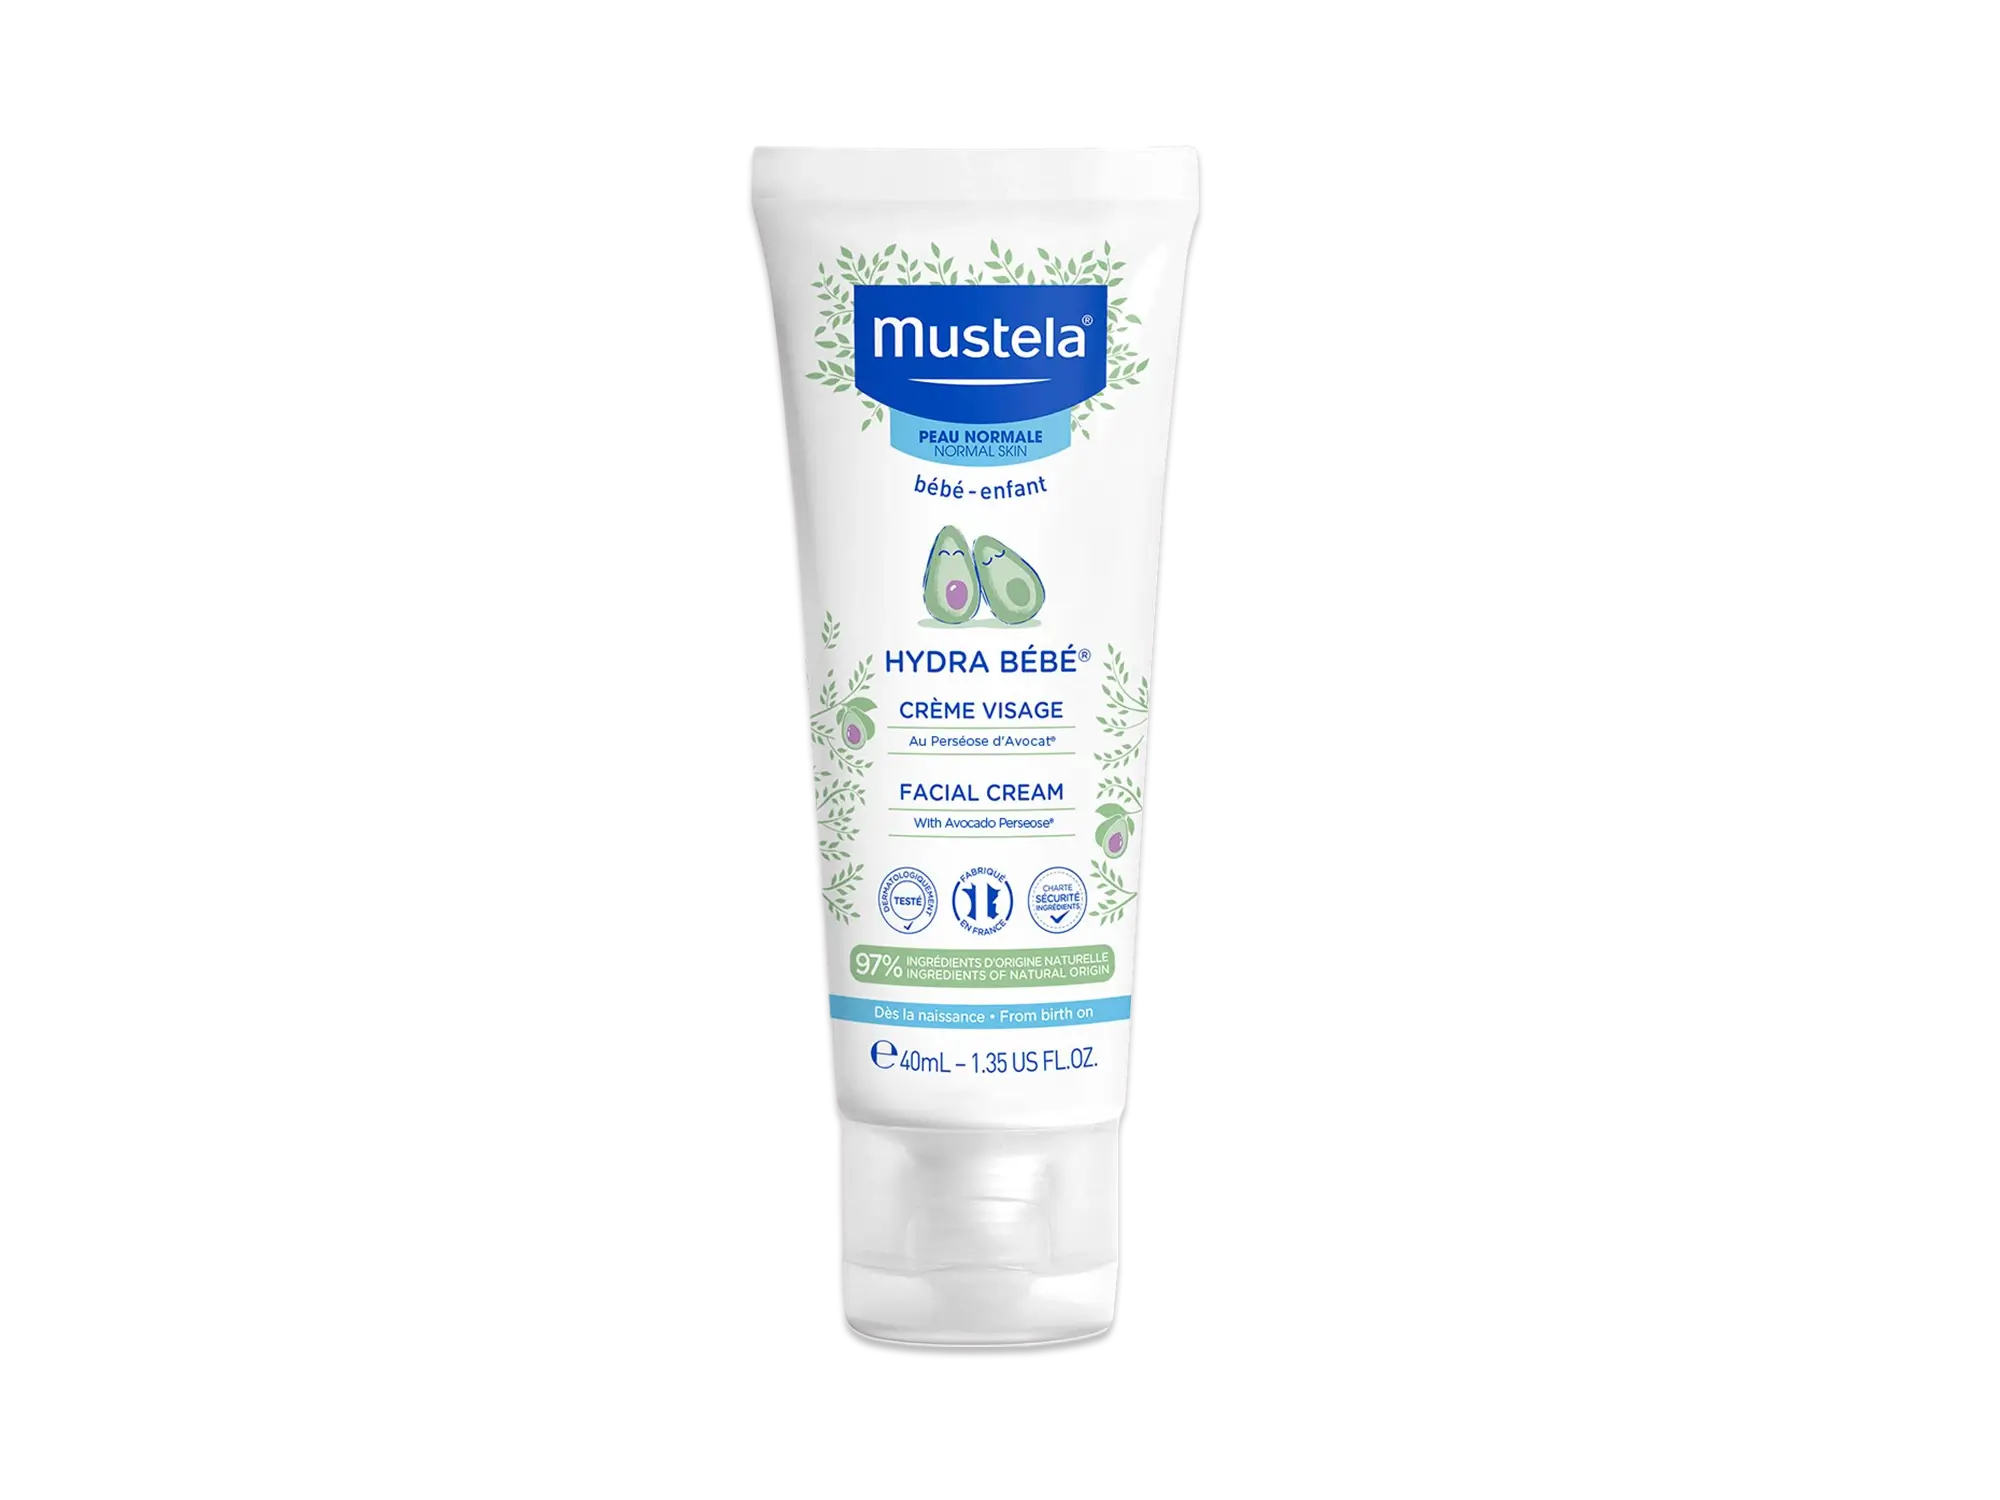 Mustela Baby Hydra Bébé Face Cream 40ml (1.35fl oz)